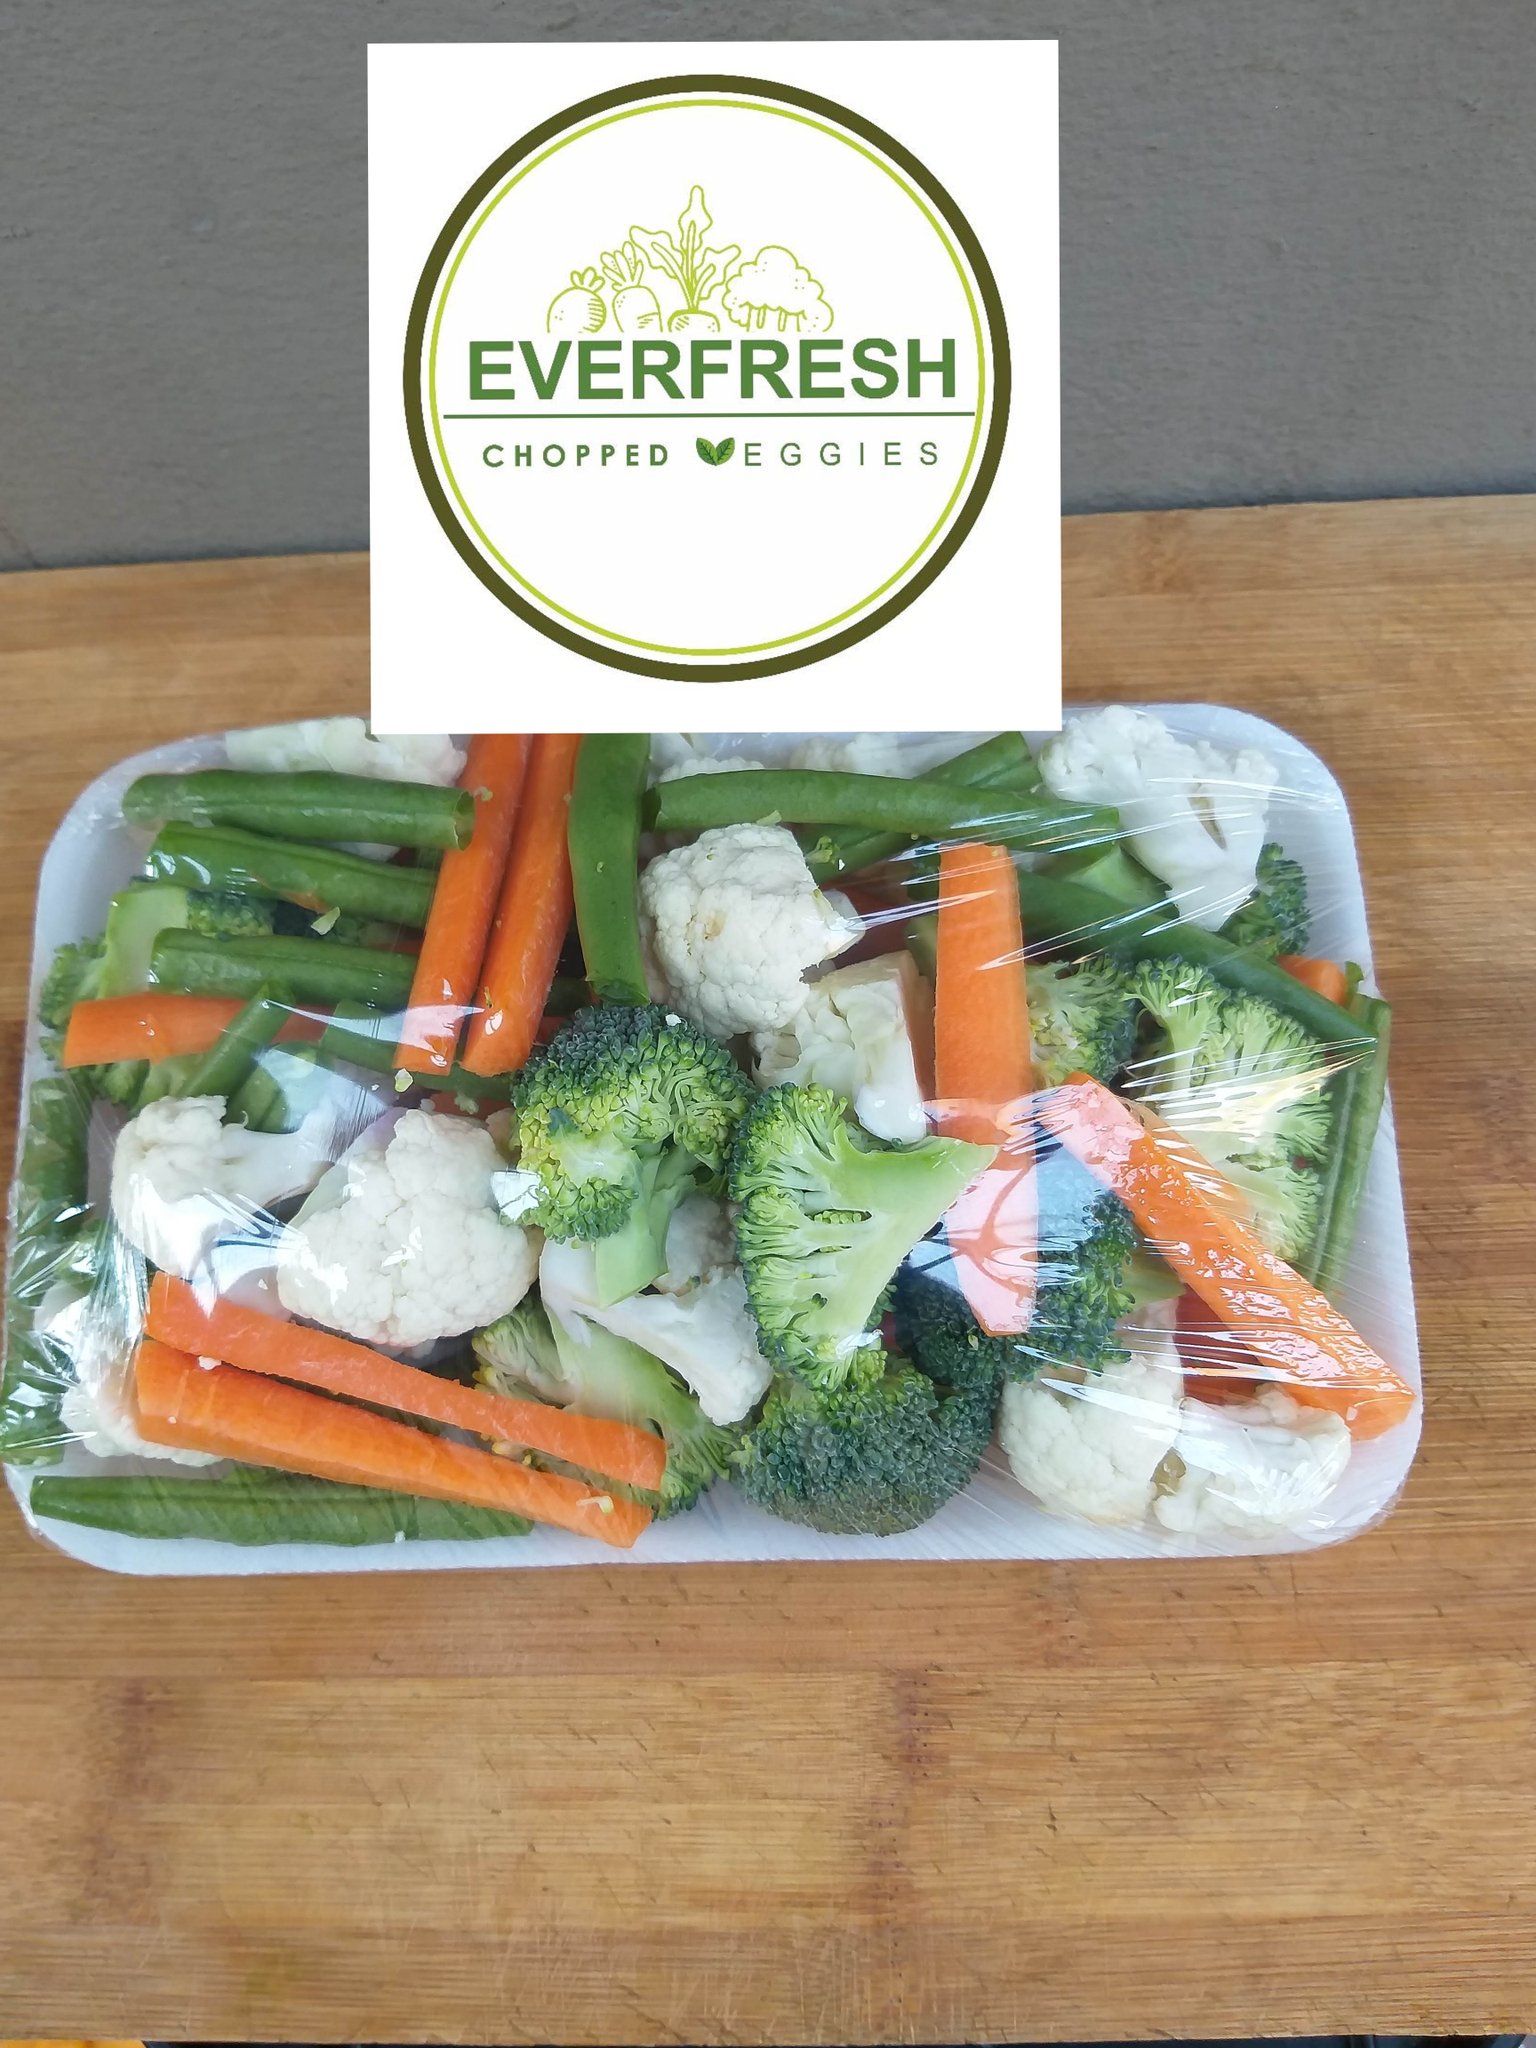 EverFresh Chopped Veggies